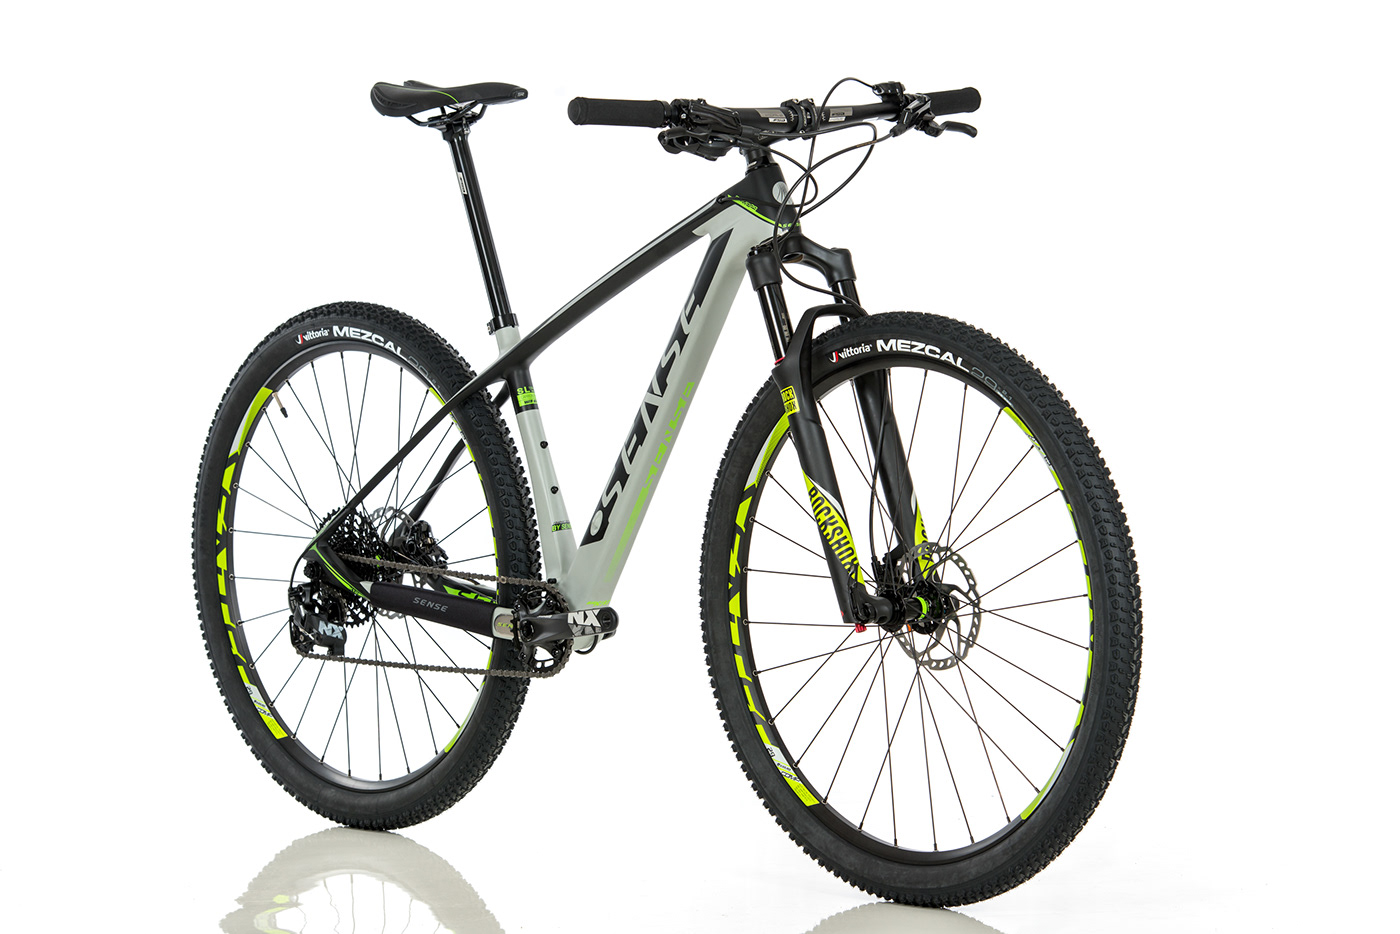 Gabriel Delfino Delfino Design carbon bike carbon Bike Bicycle cycle Design Brasileiro road bike MTB